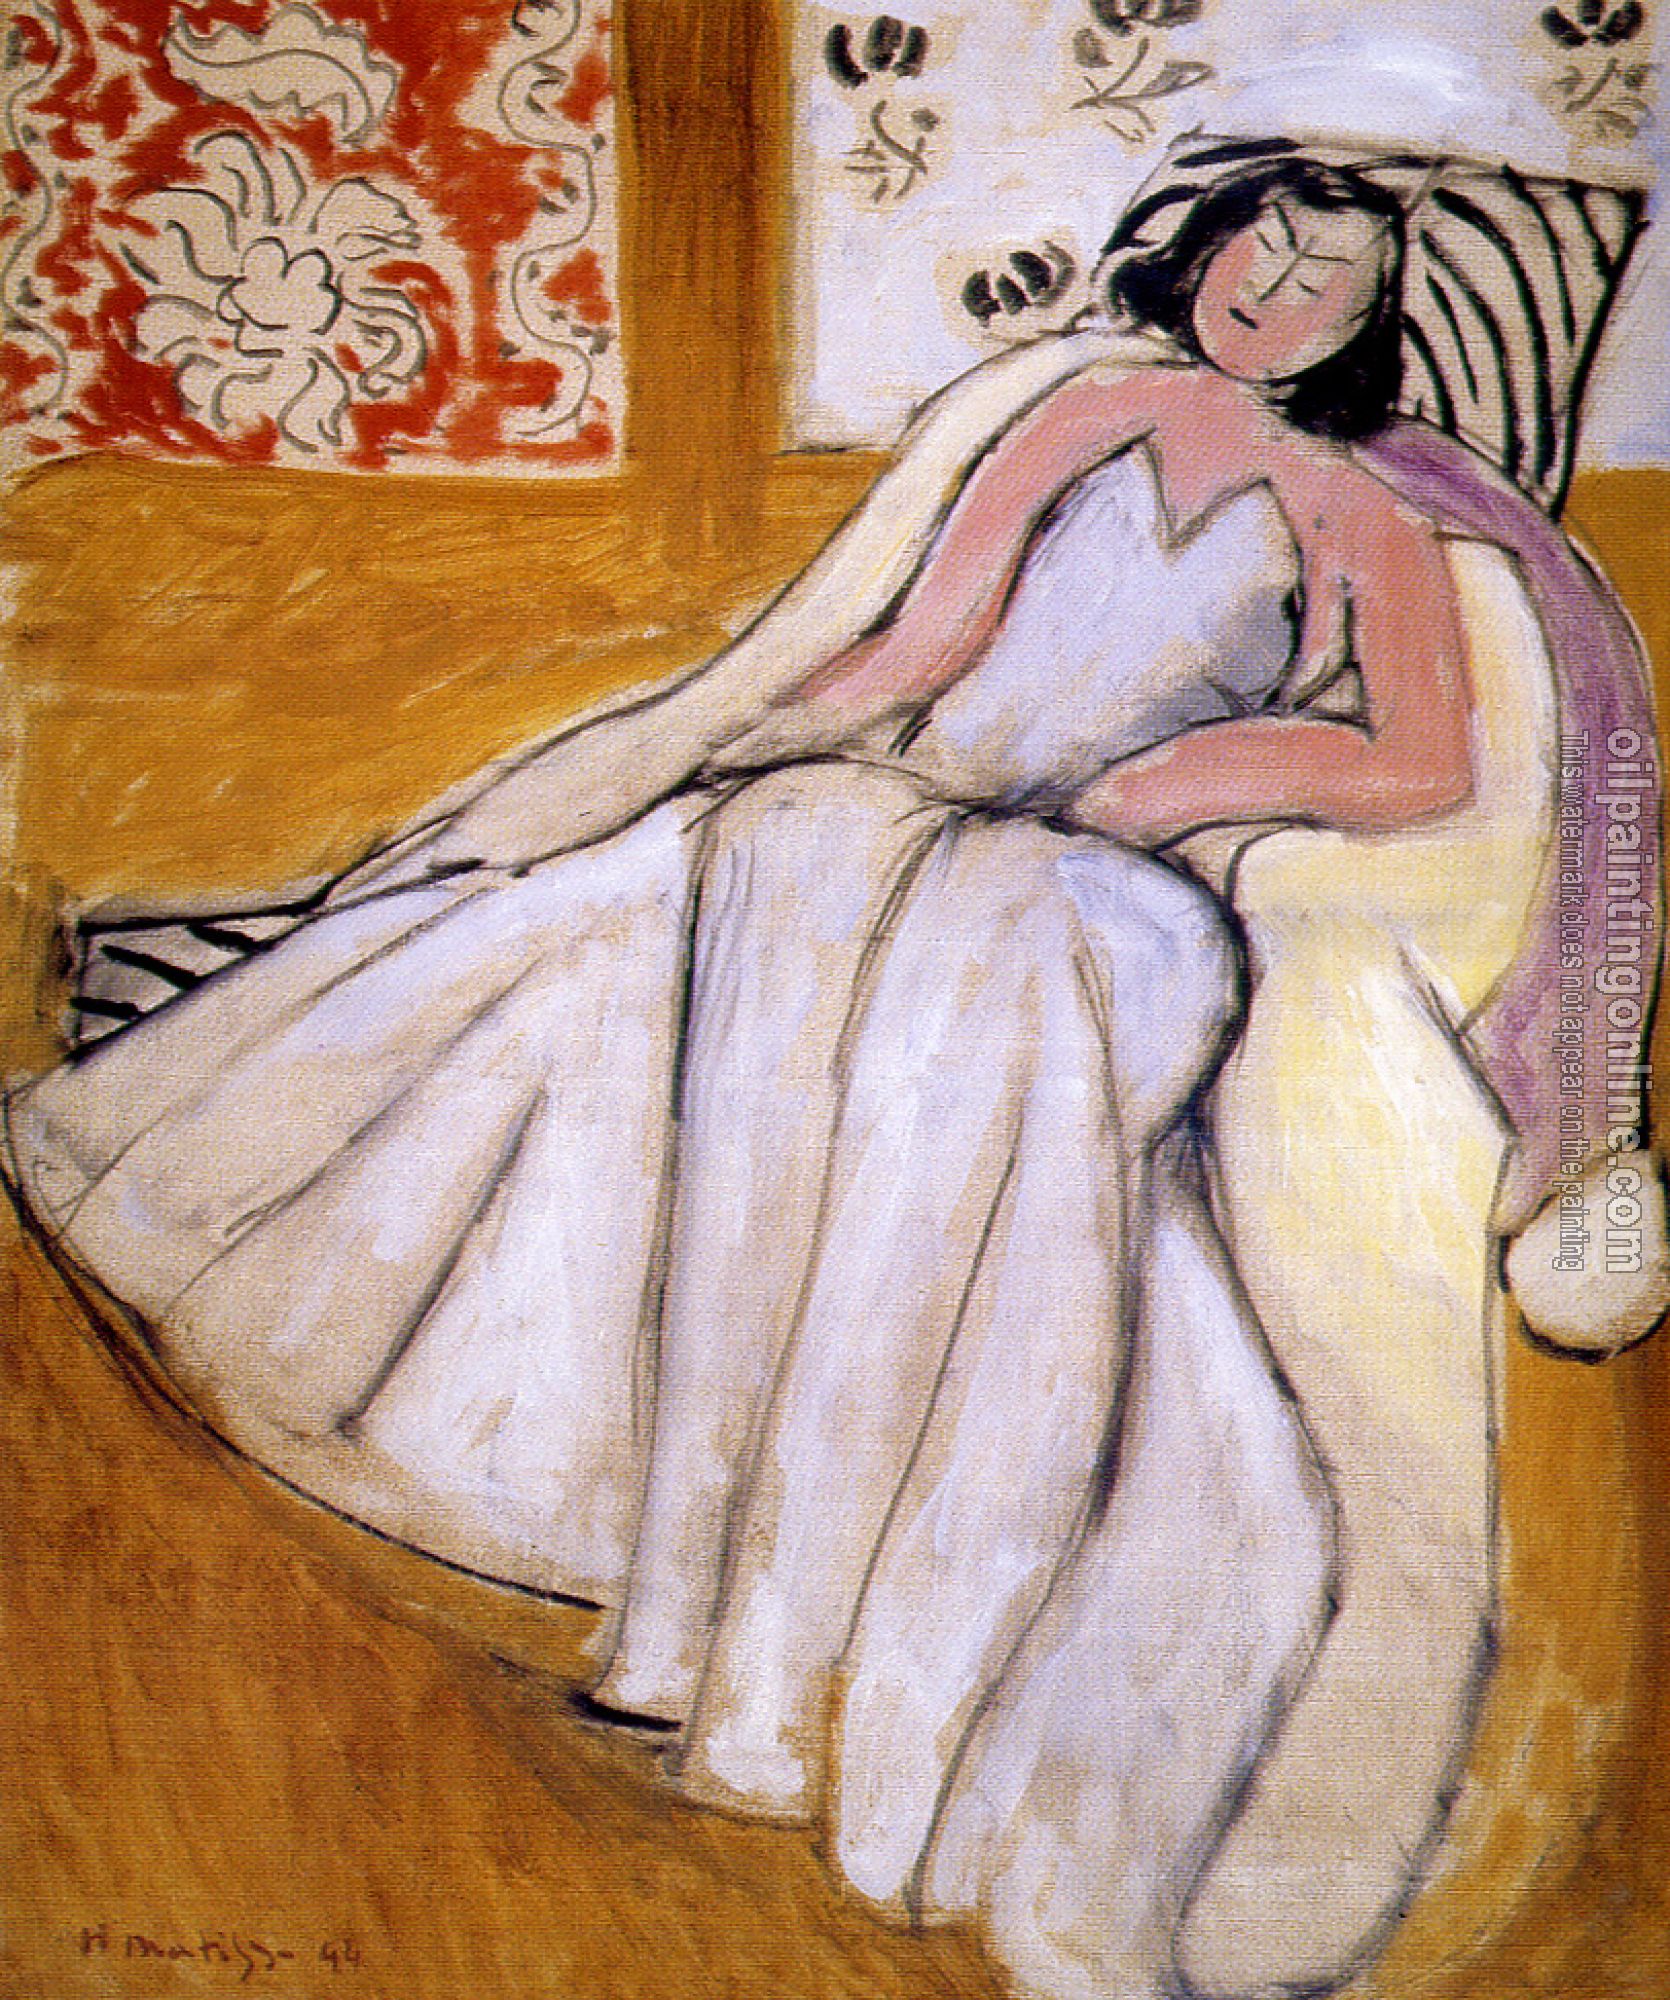 Matisse, Henri Emile Benoit - young woman with white fur coat